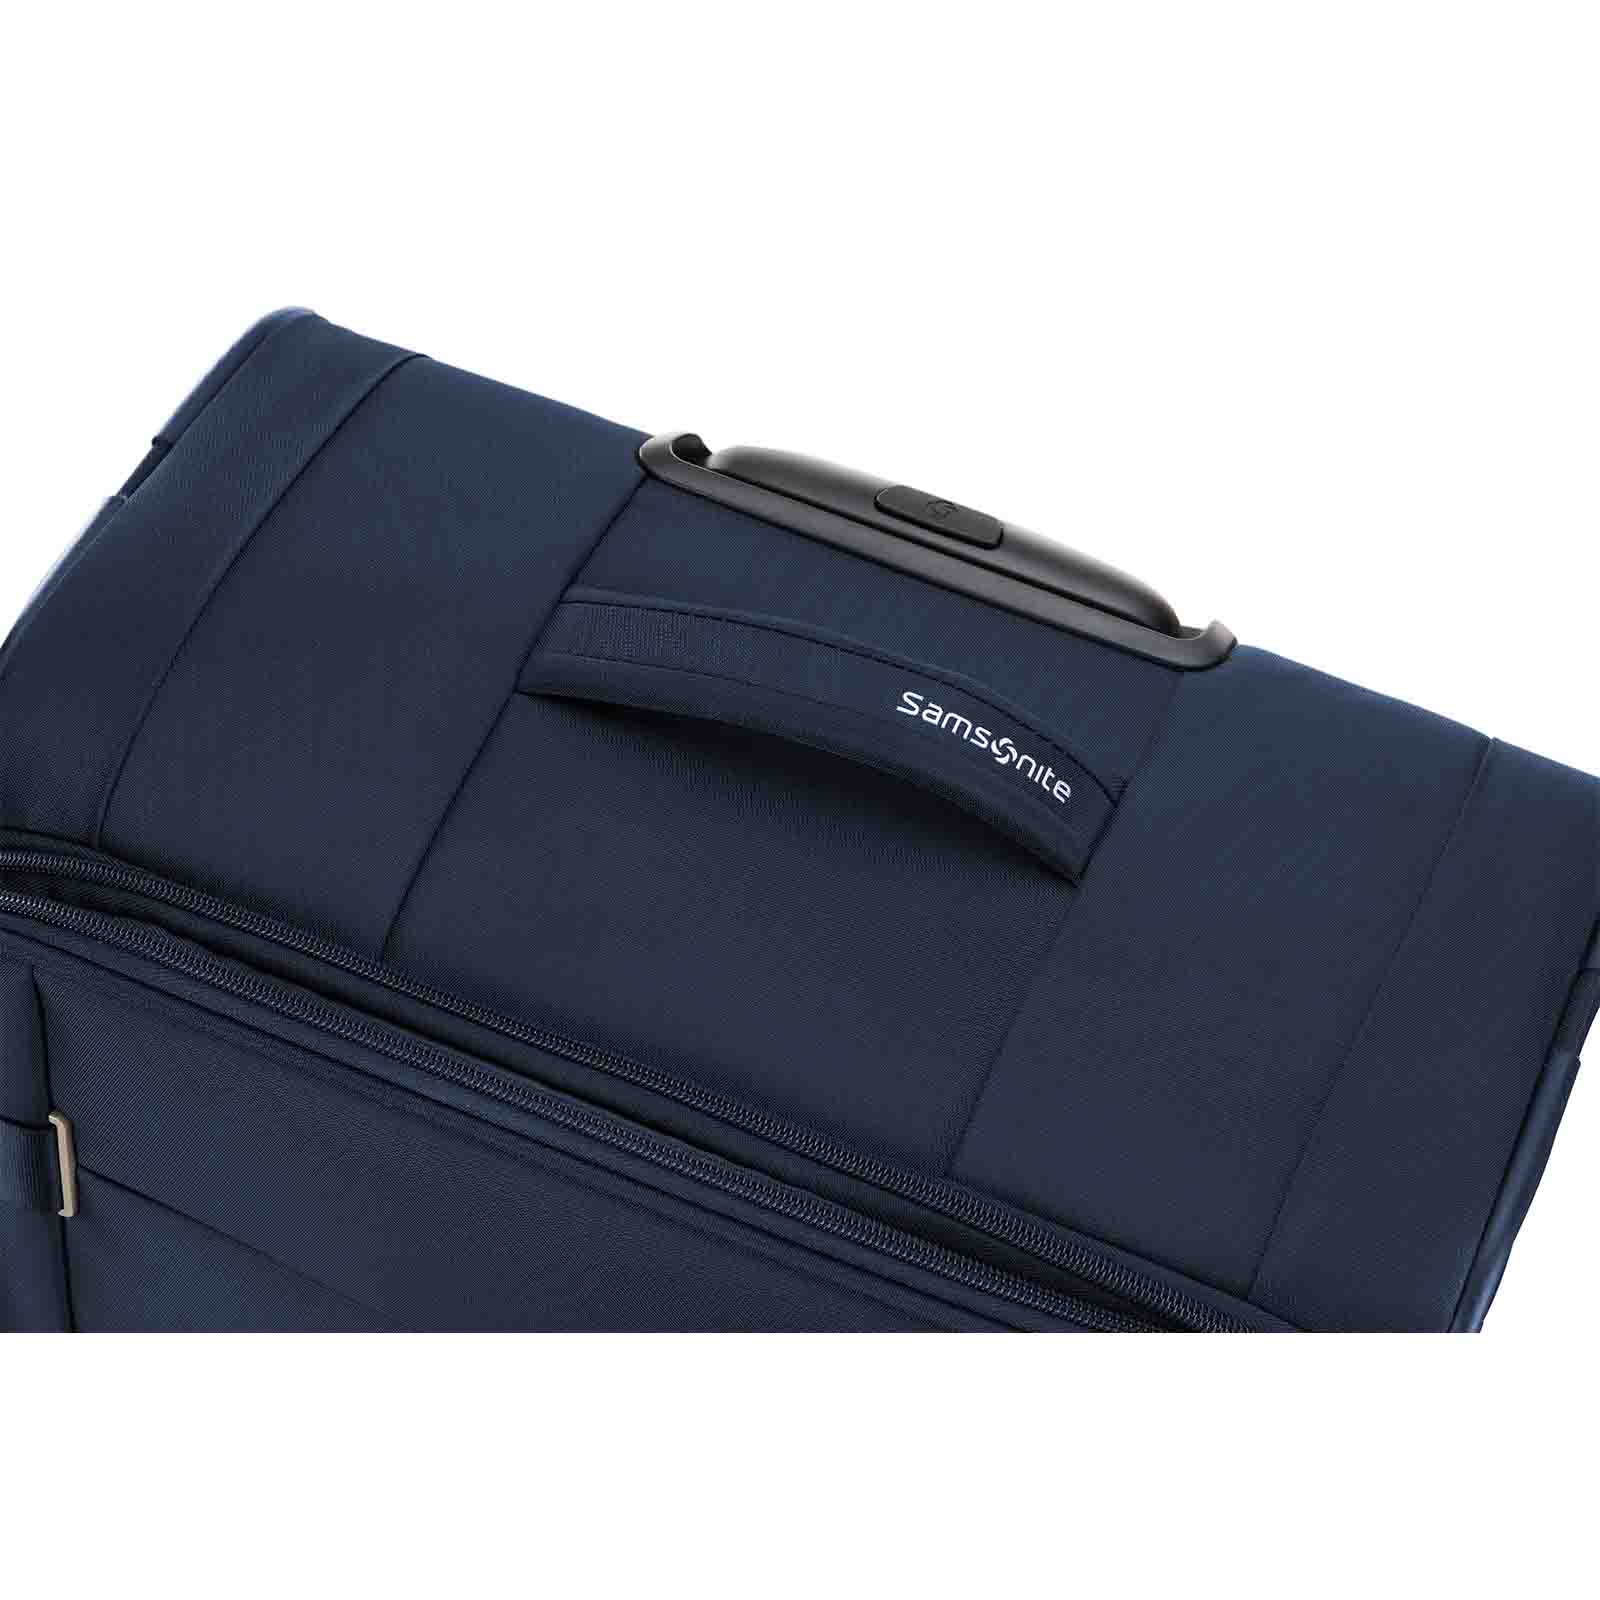 Samsonite-City-Rhythm-78cm-Suitcase-Navy-Handle